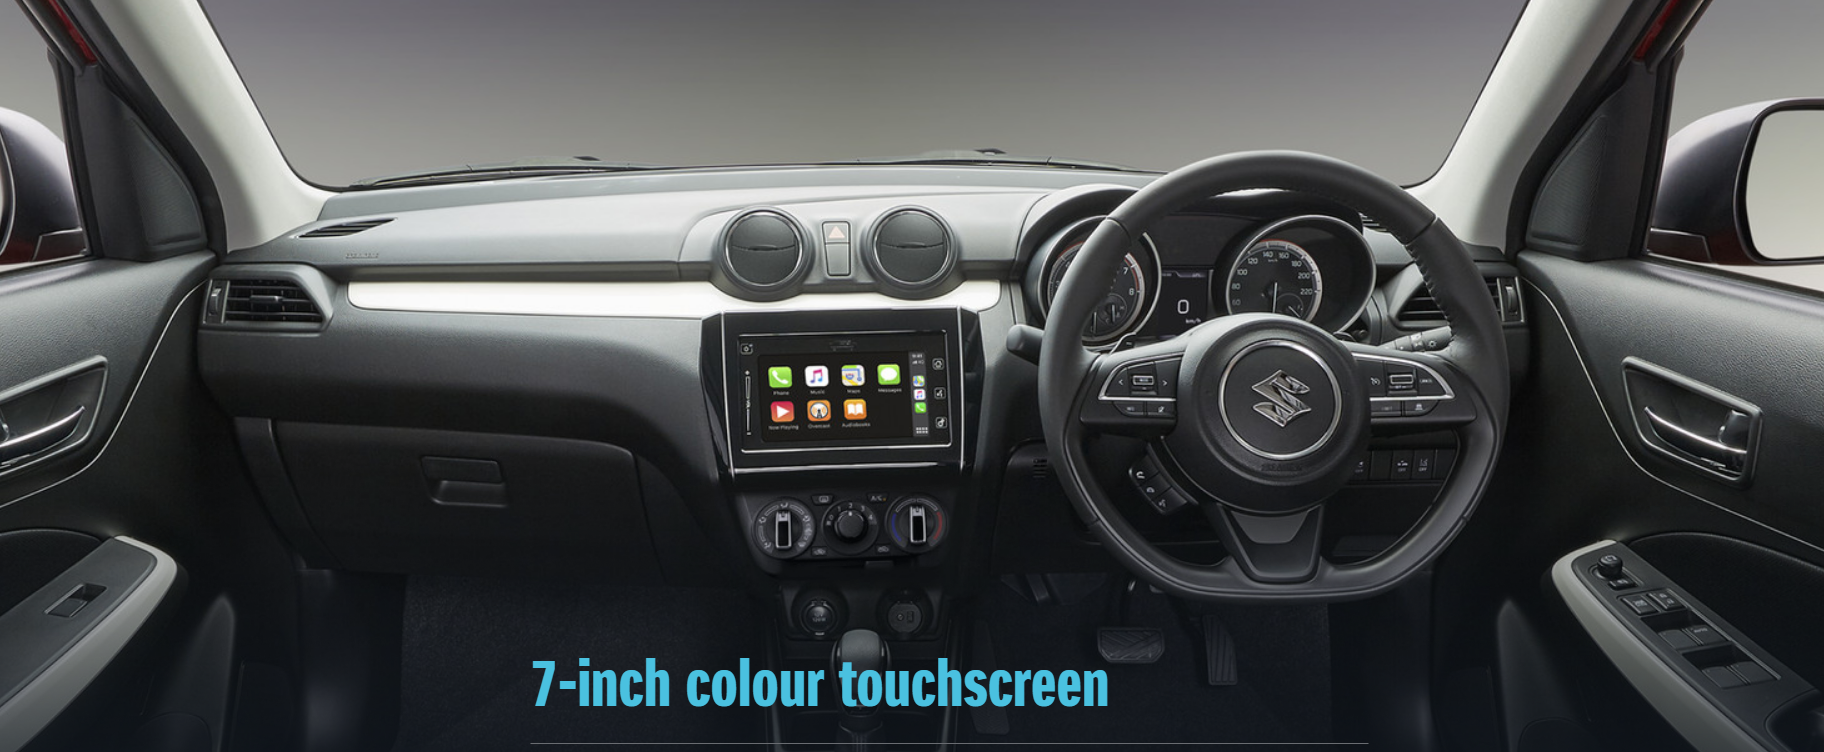 7-inch colour touchscreen